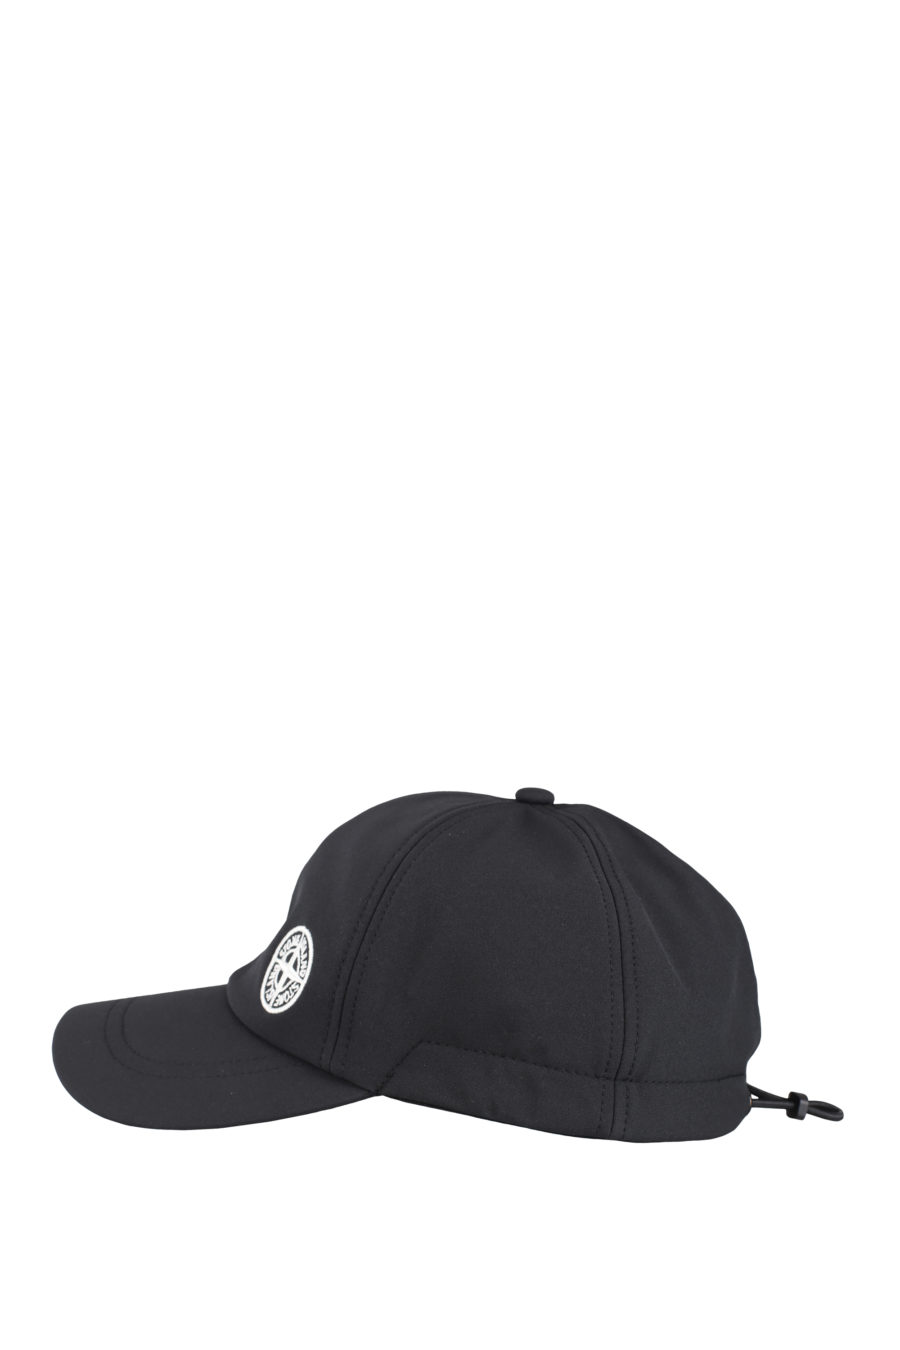 Gorra negra con logotipo bordado blanco - IMG 9736